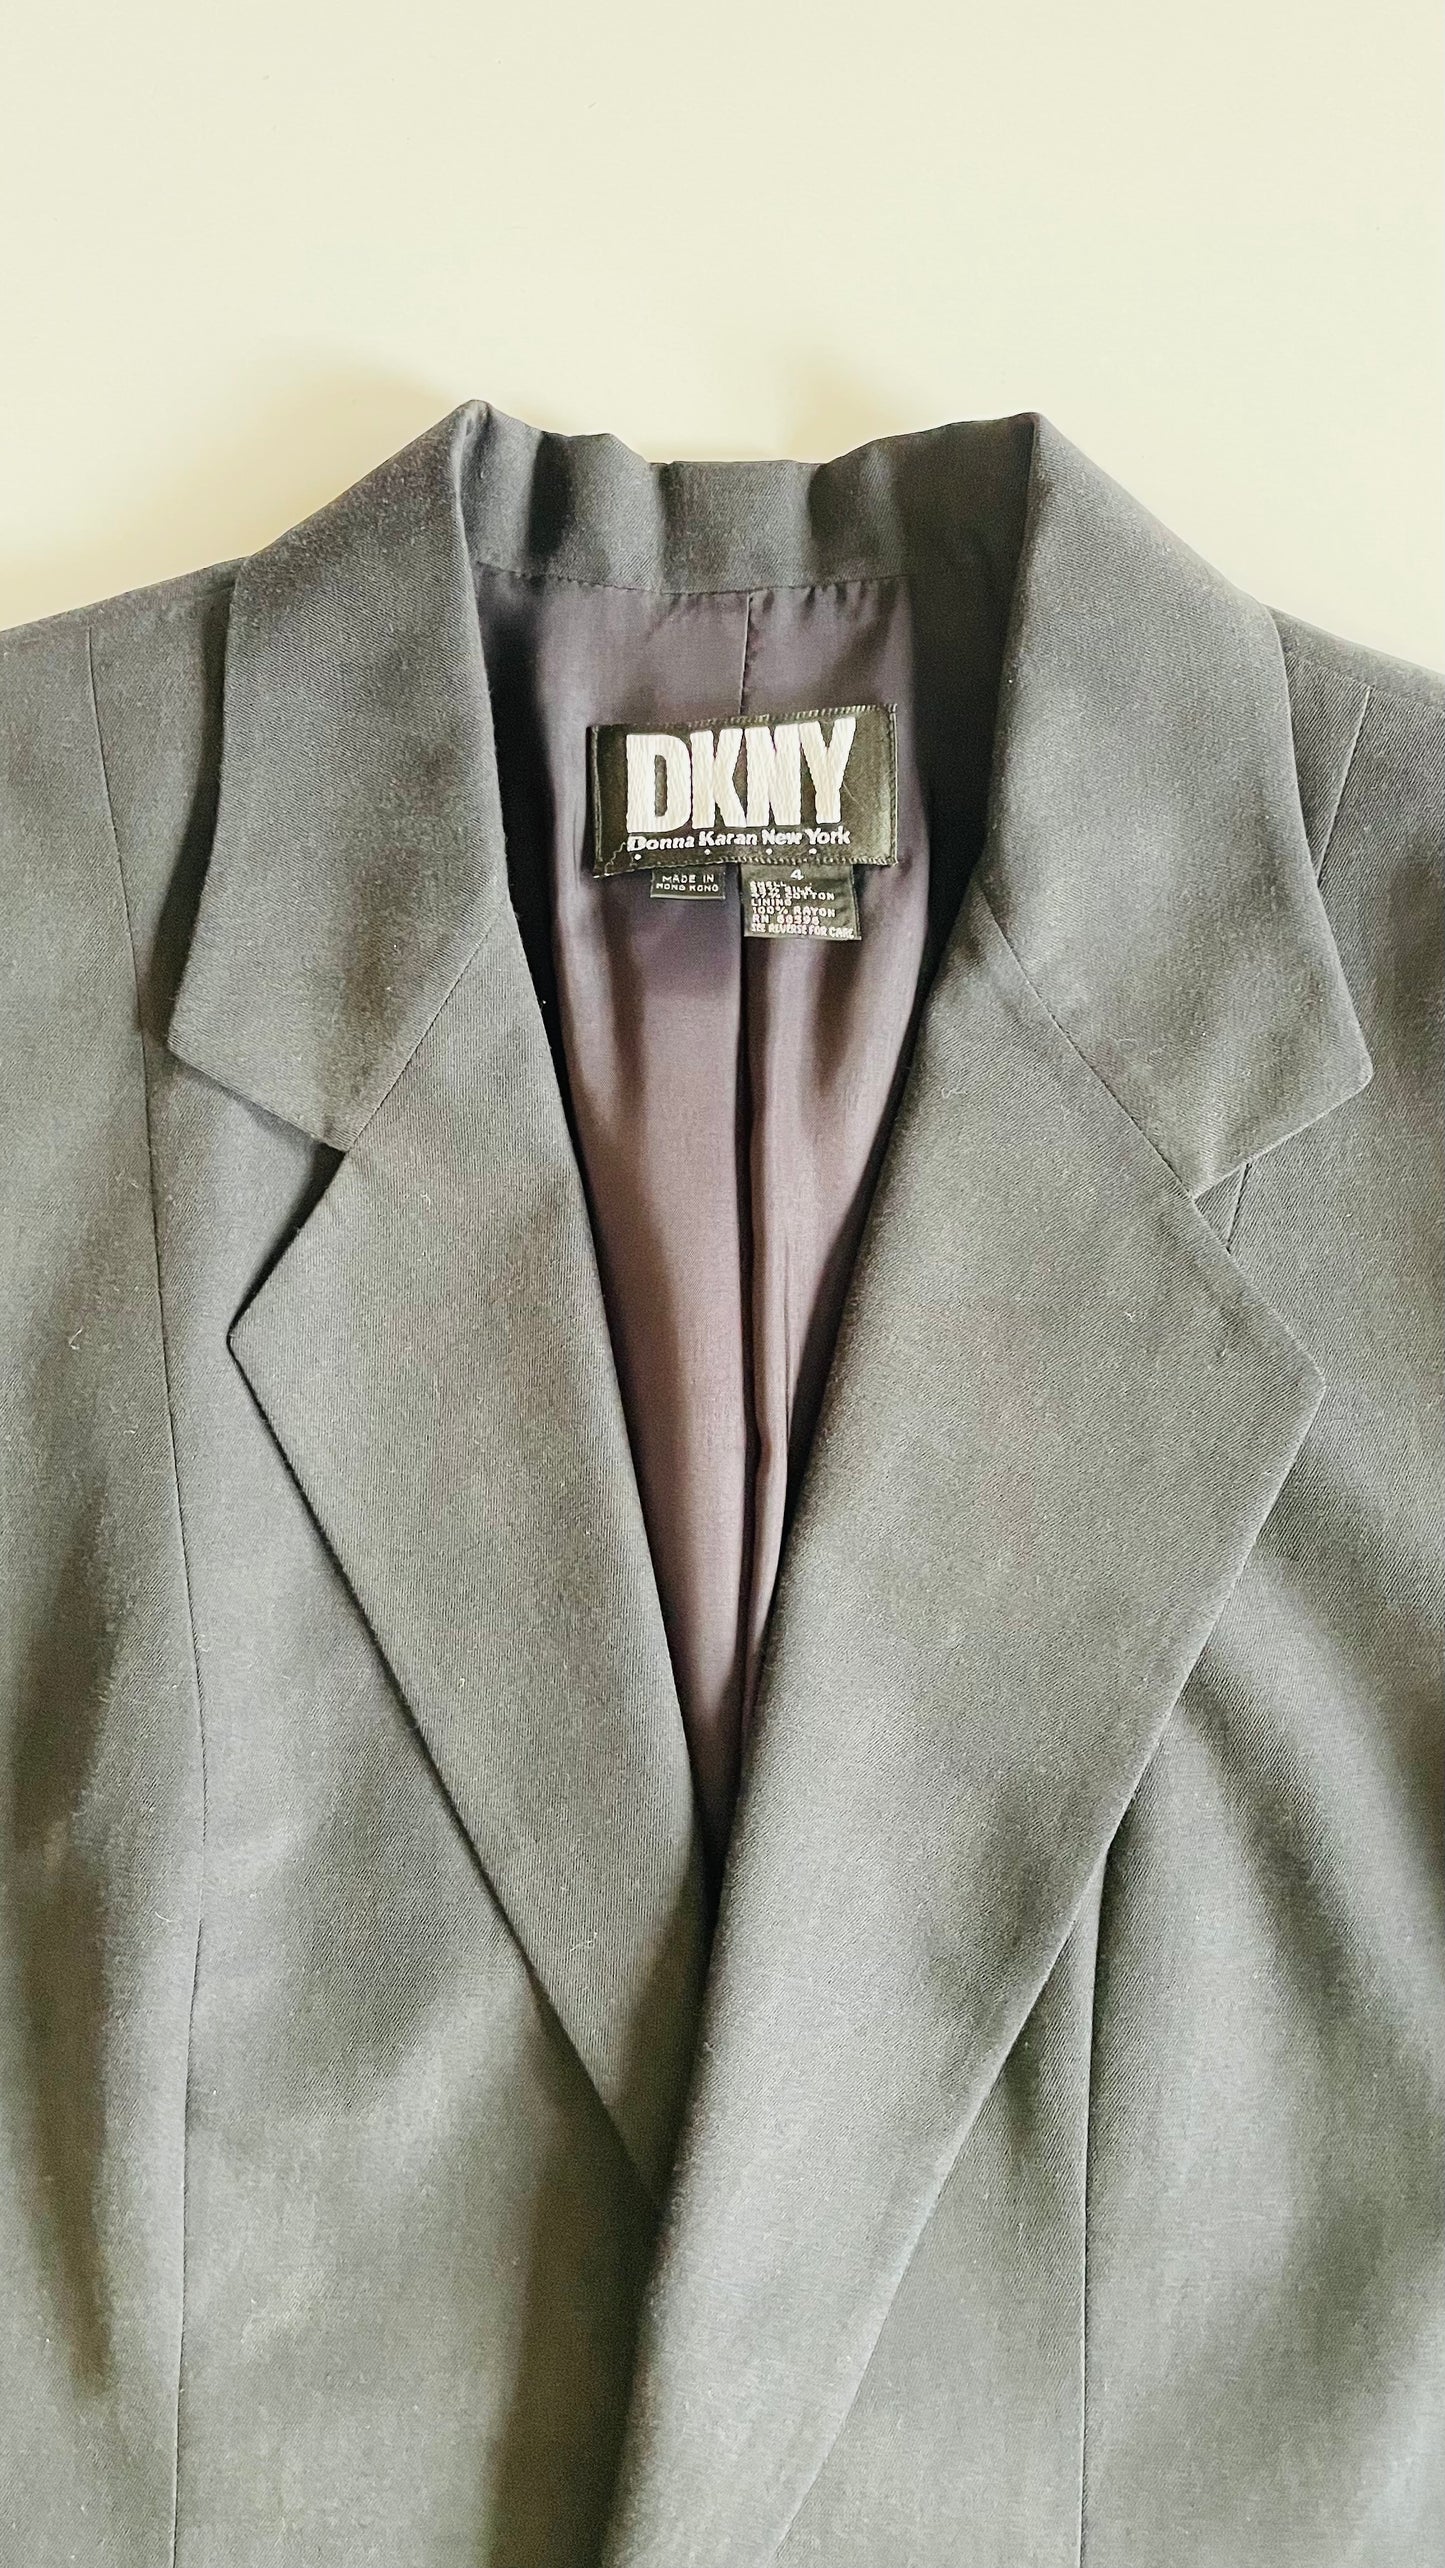 Vintage 90s DKNY navy blazer - Size 4